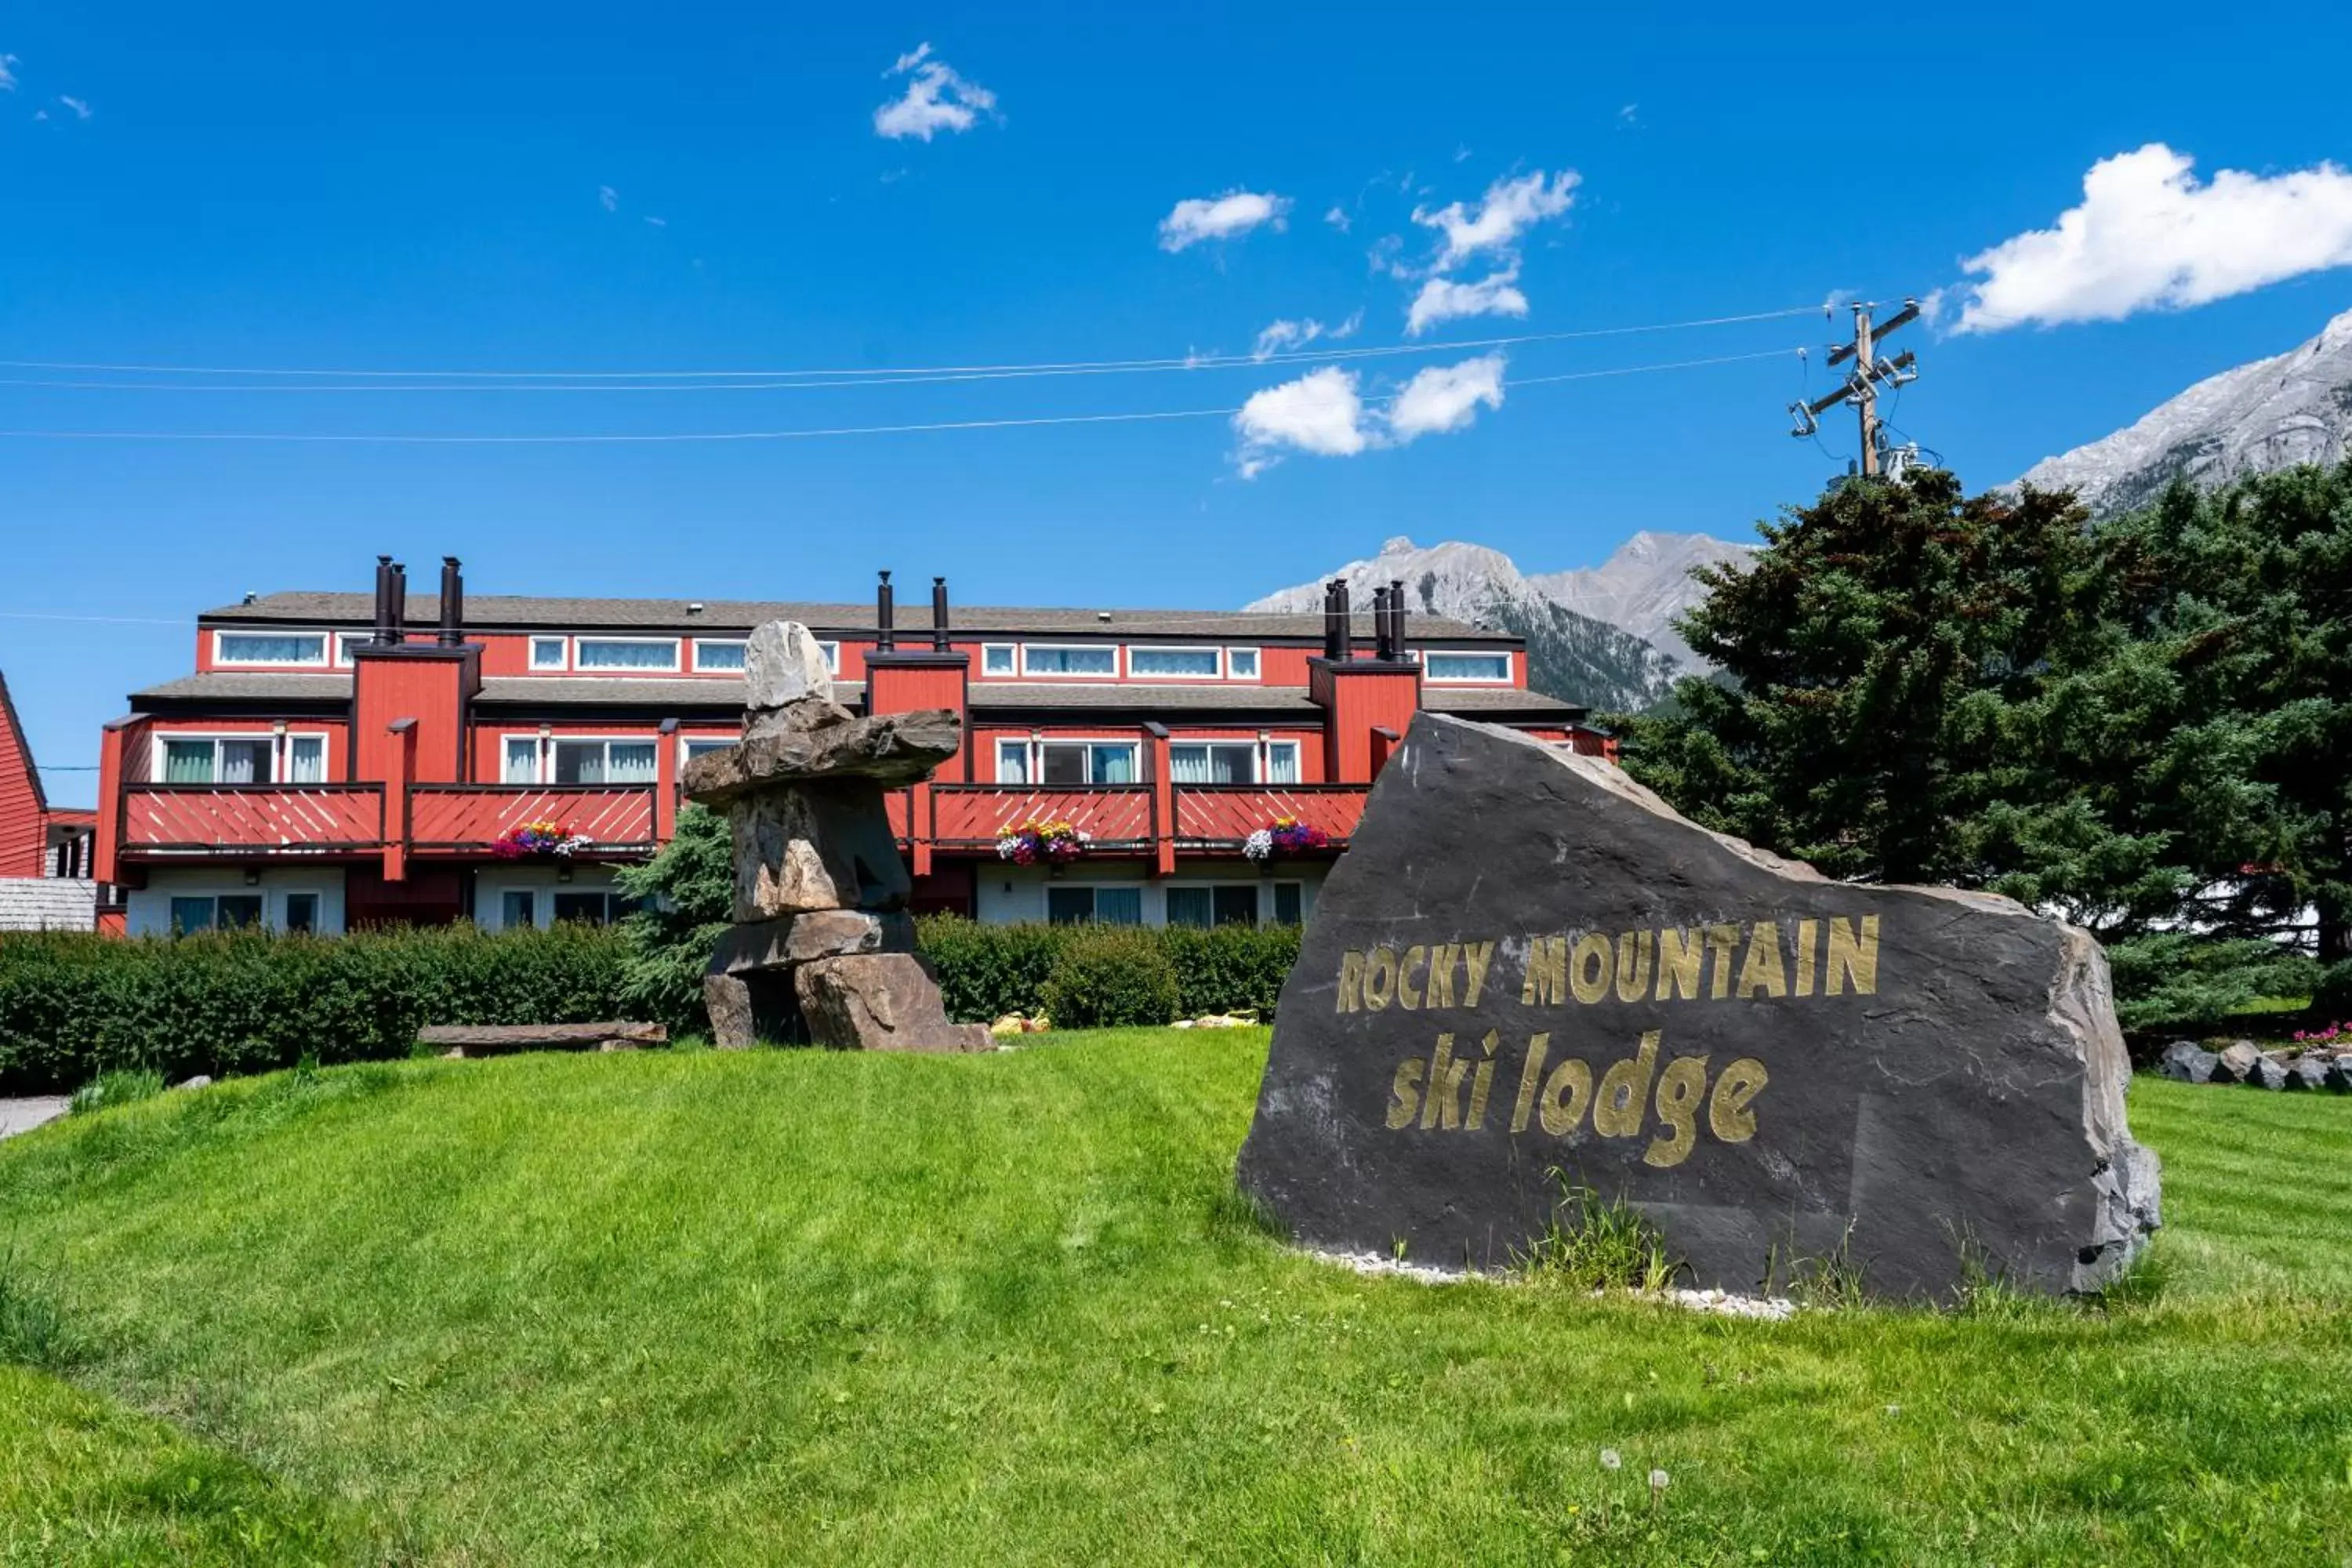 Property Building in Rocky Mountain Ski Lodge